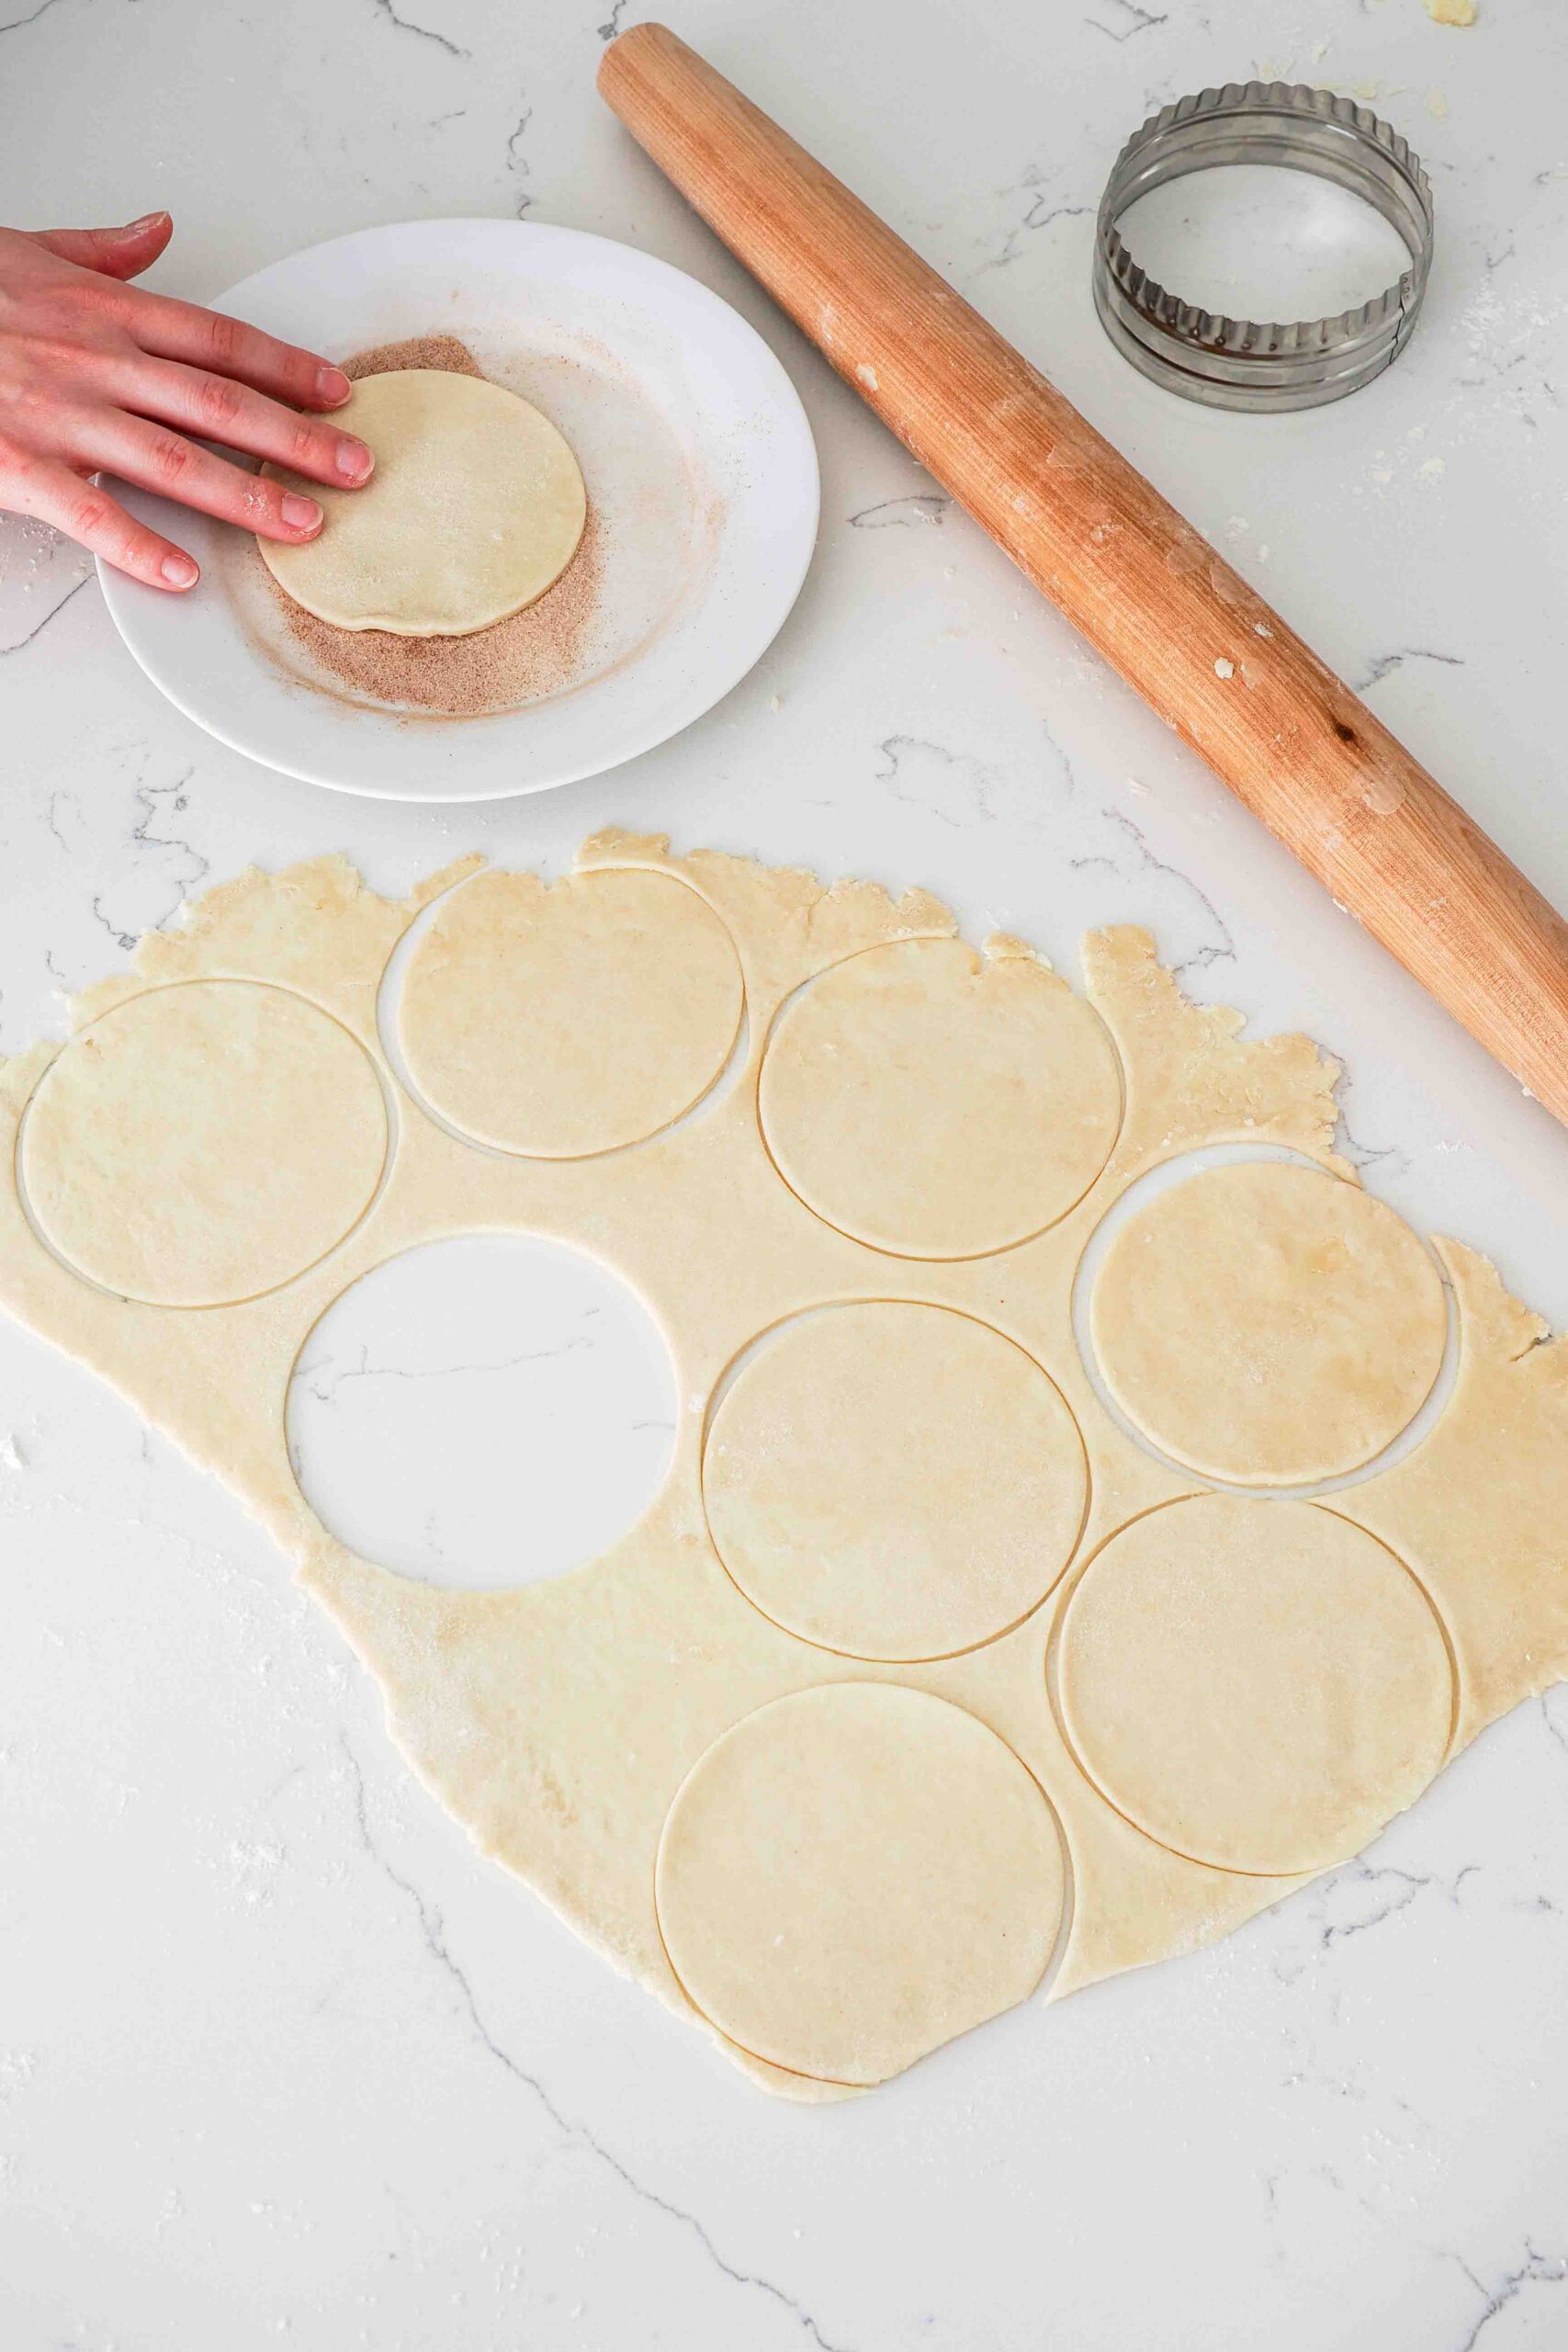 A hand dips a round of pie dough into cinnamon sugar.